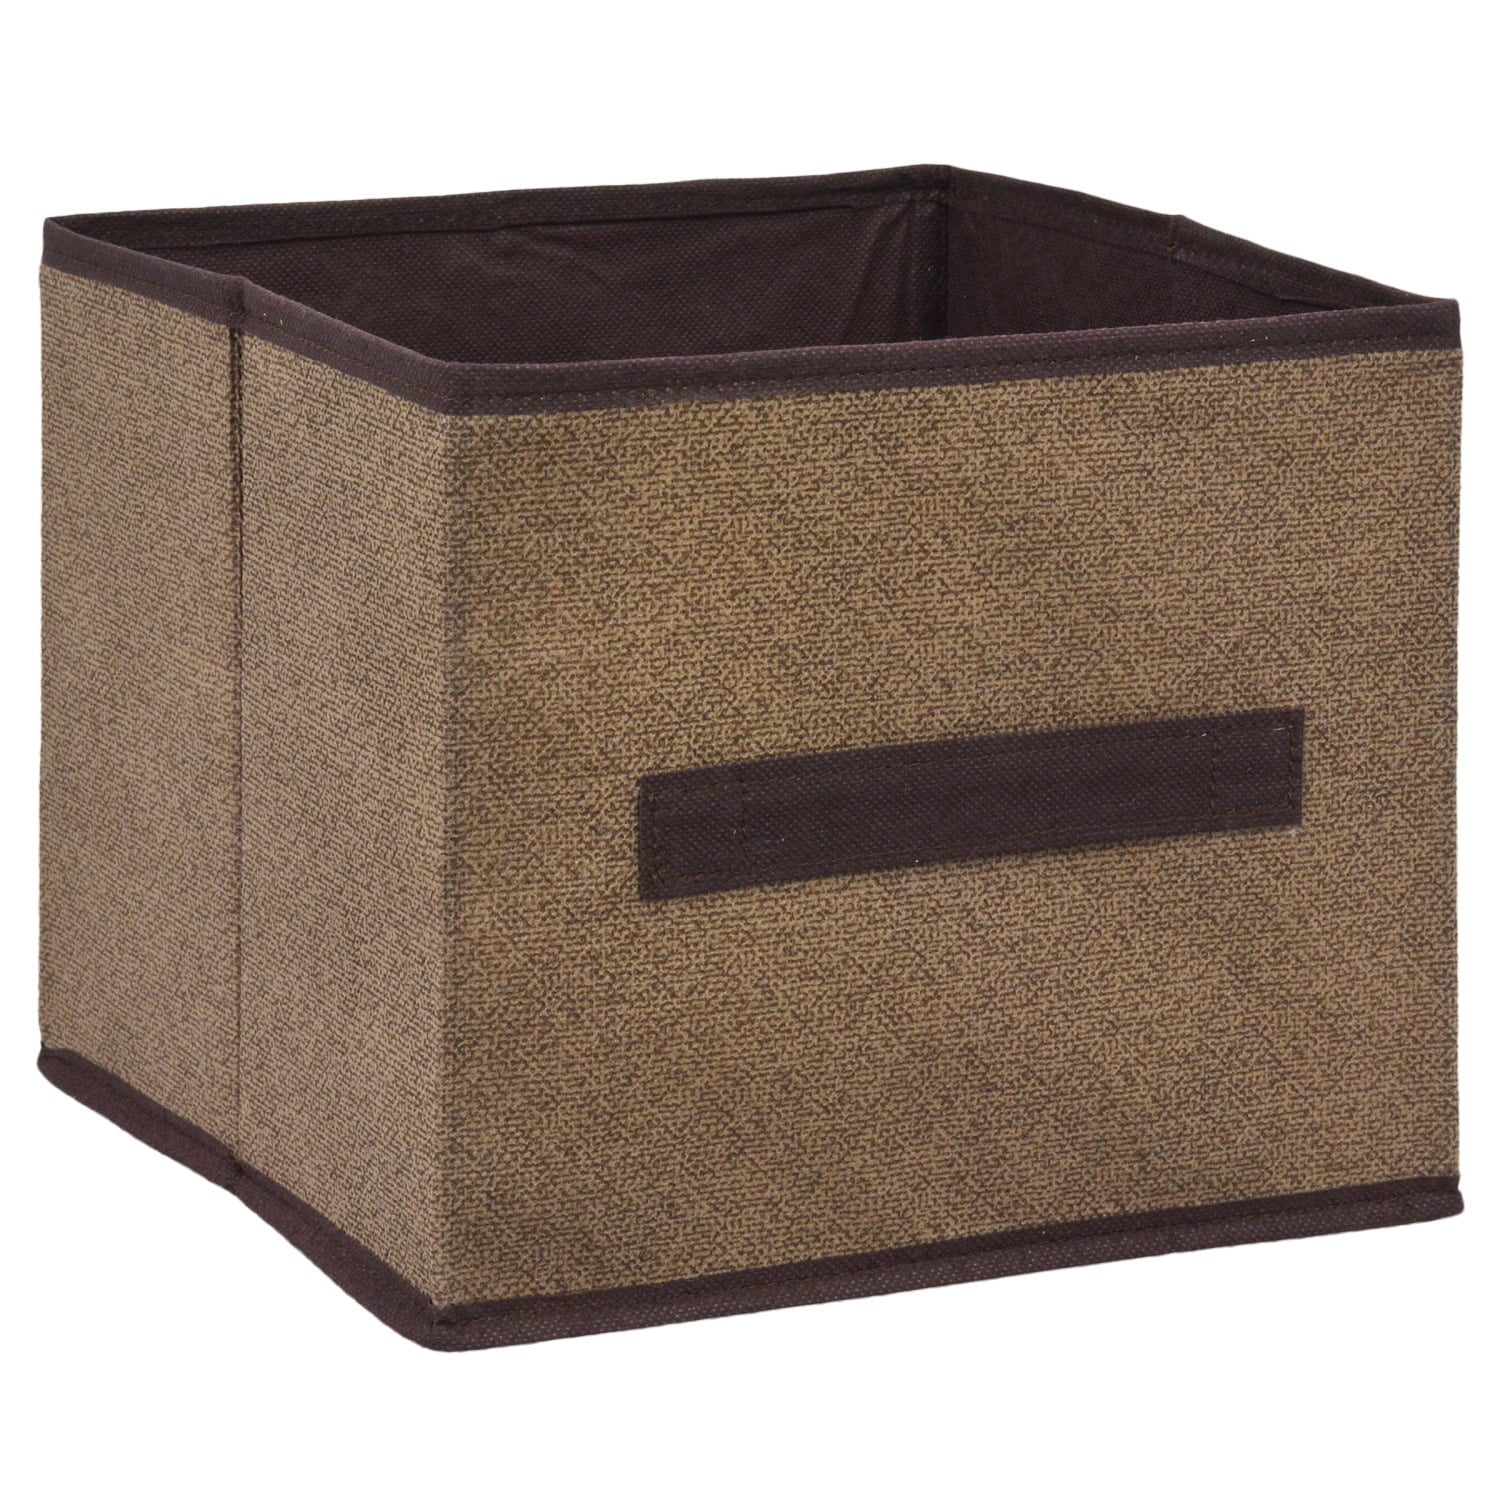 Set of 4 Black & White Check Flannel Fabric Storage Cube Bin 9x9x8 FREE SHIPPING 